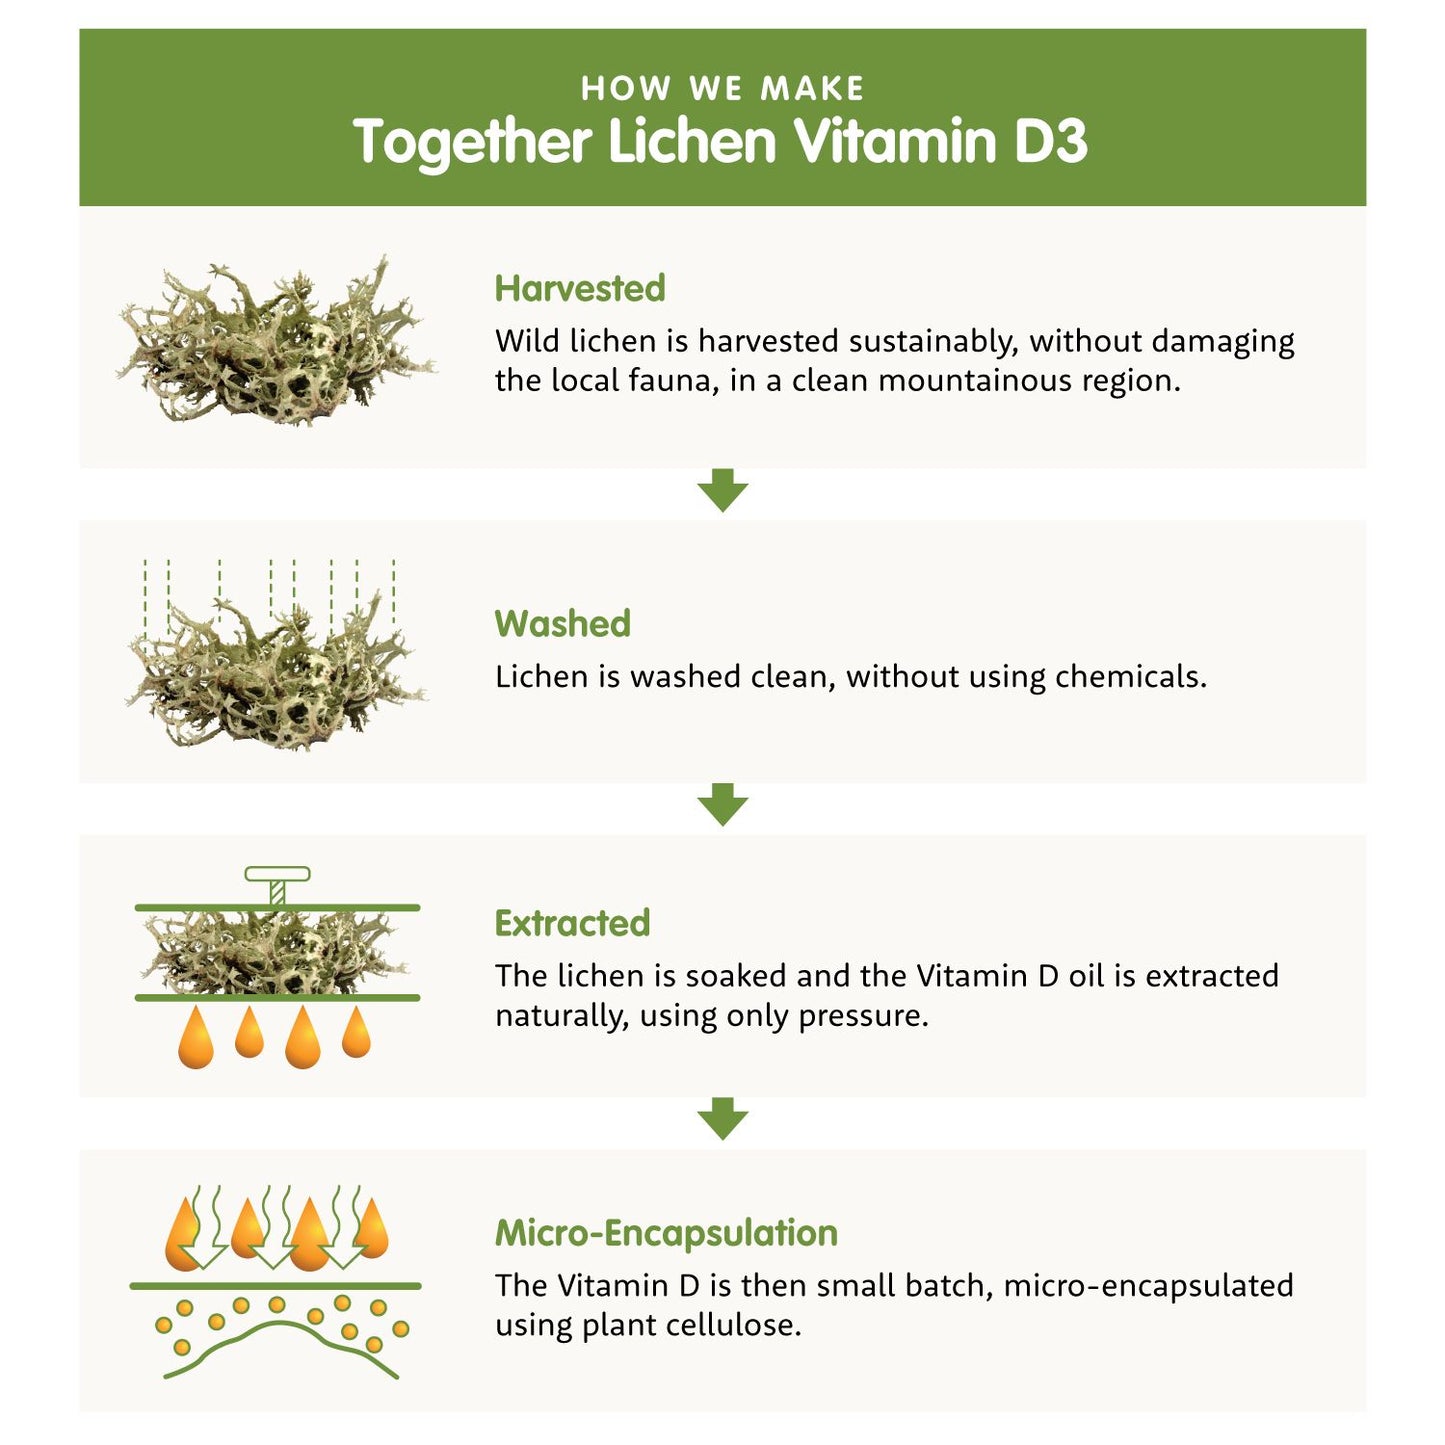 Together Health Vitamin D3-Together Health-Hyvinvoinnin Tavaratalo